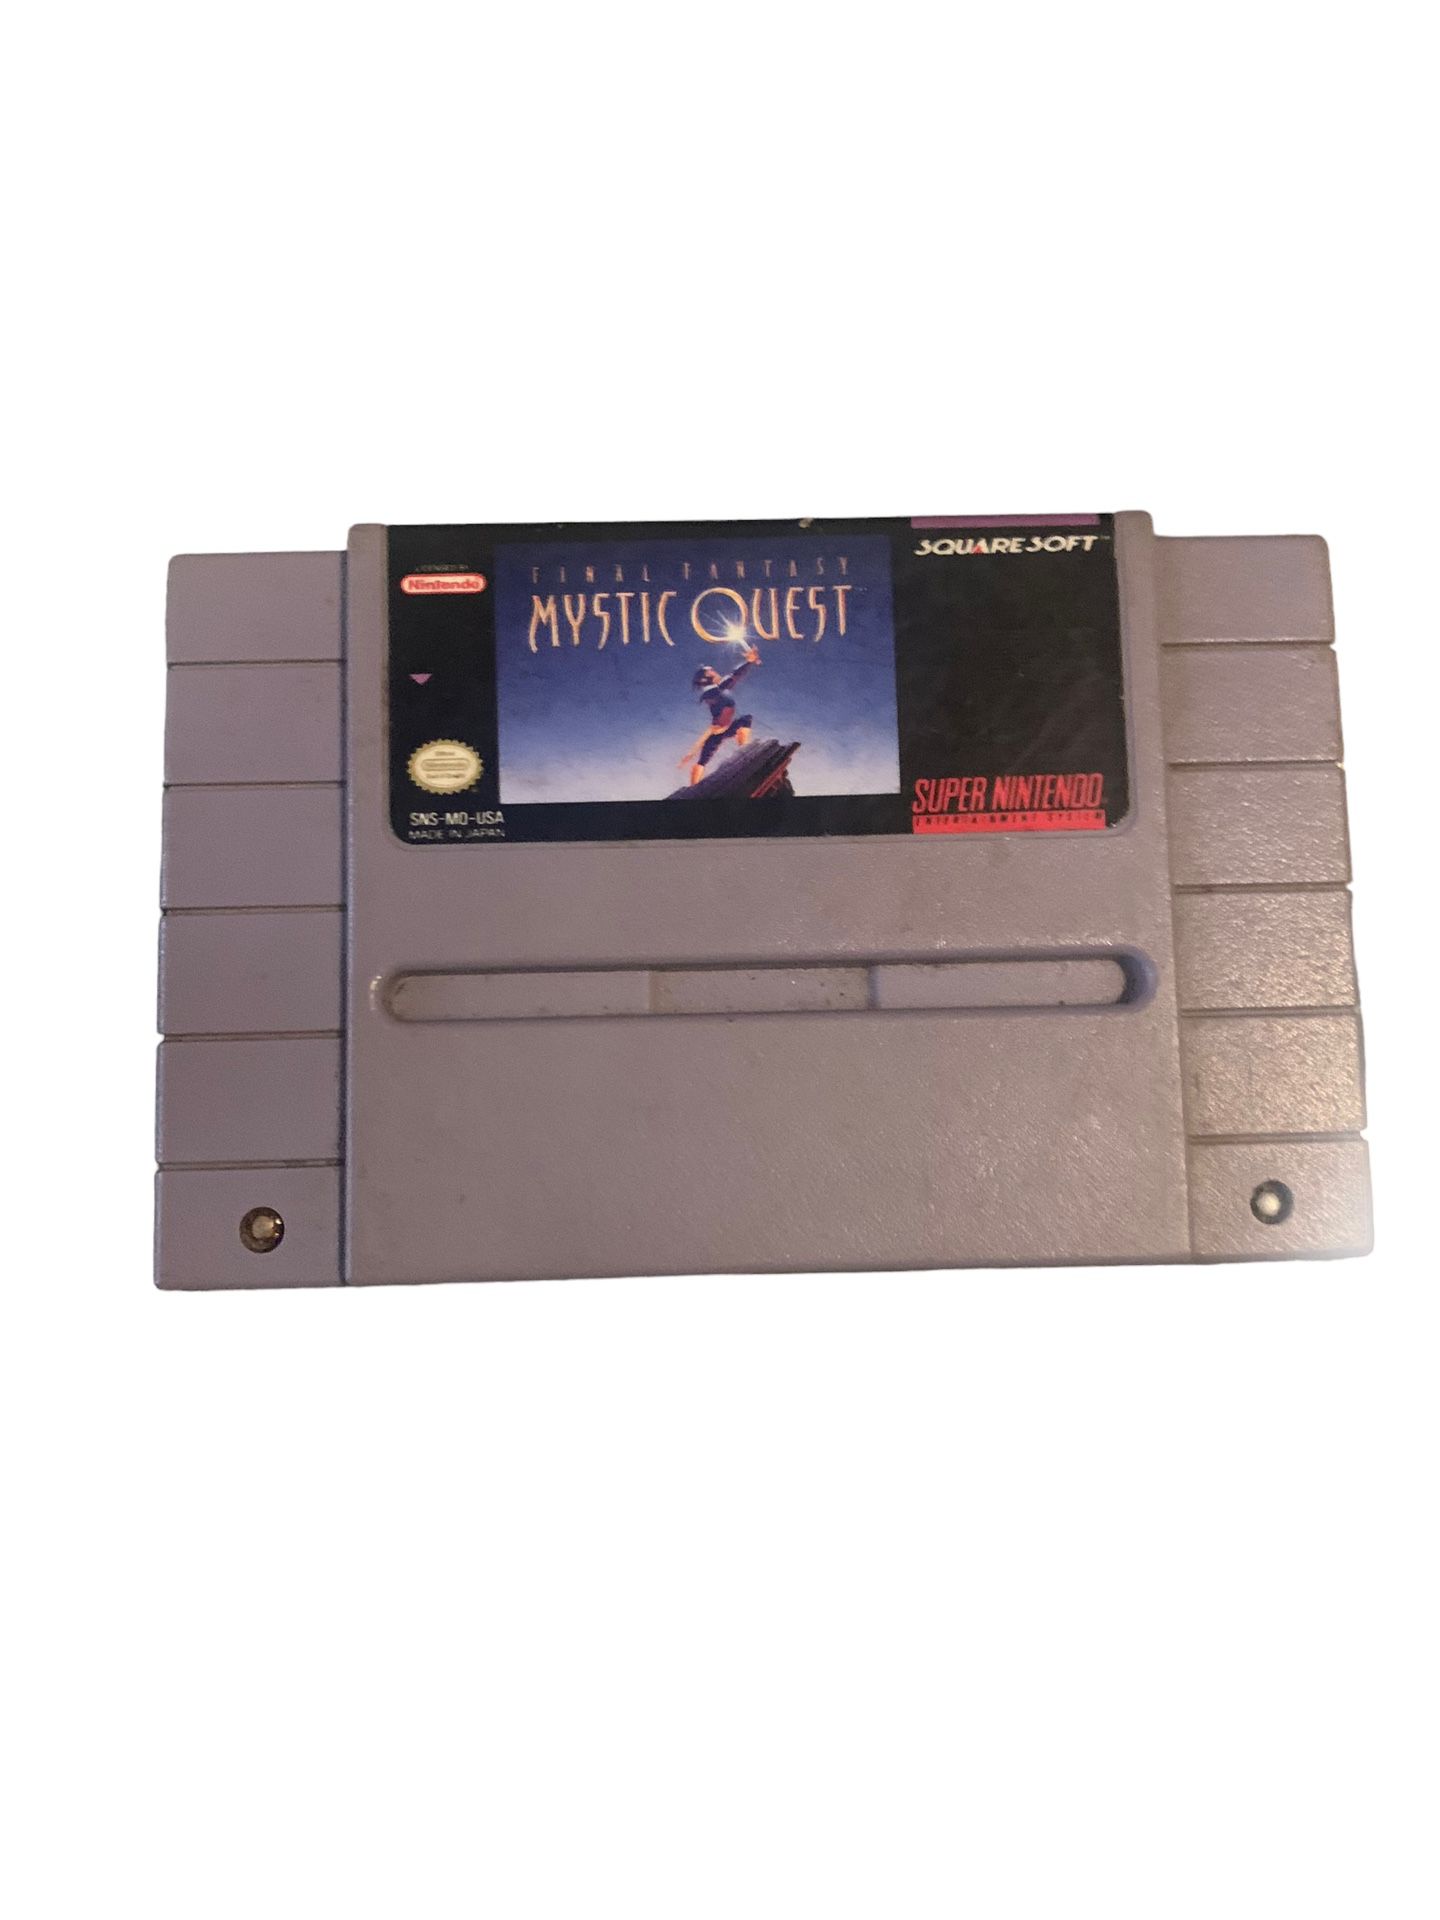 Final Fantasy: Mystic Quest (Super Nintendo, 1992) SNES, cart only,  tested